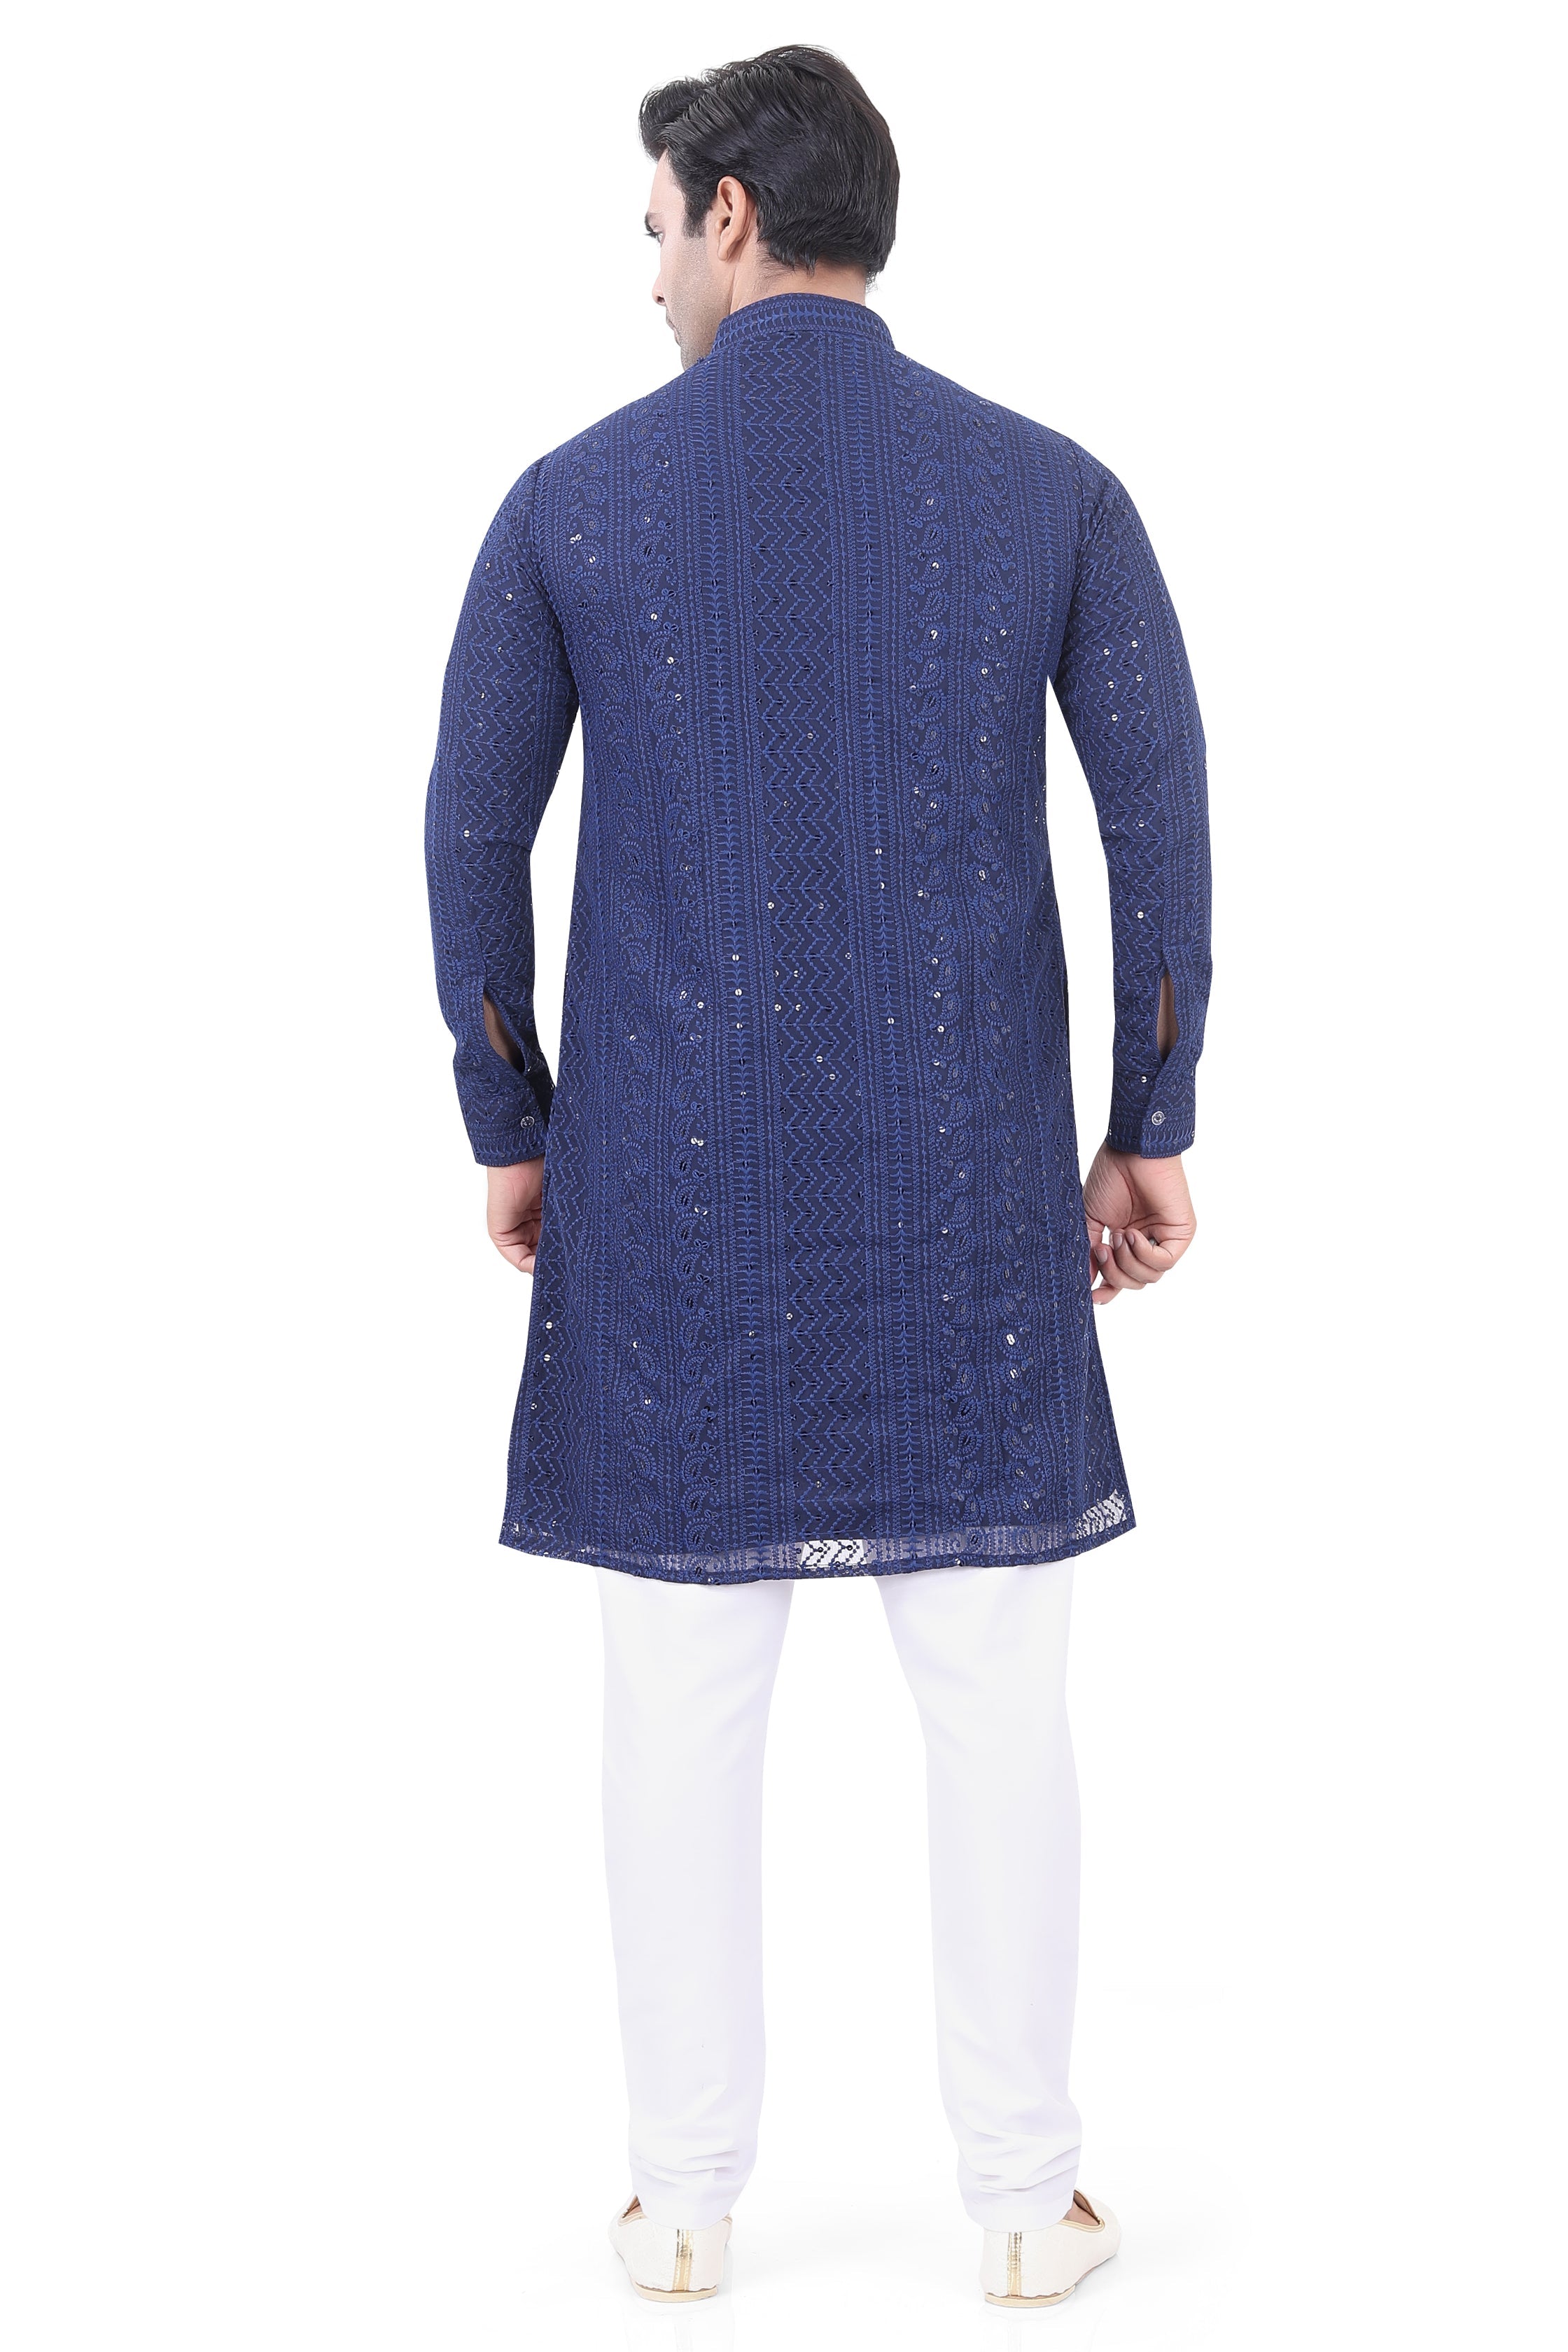 Lucknowi Kurta Pajama Set in Navy Blue  - LCKP-009